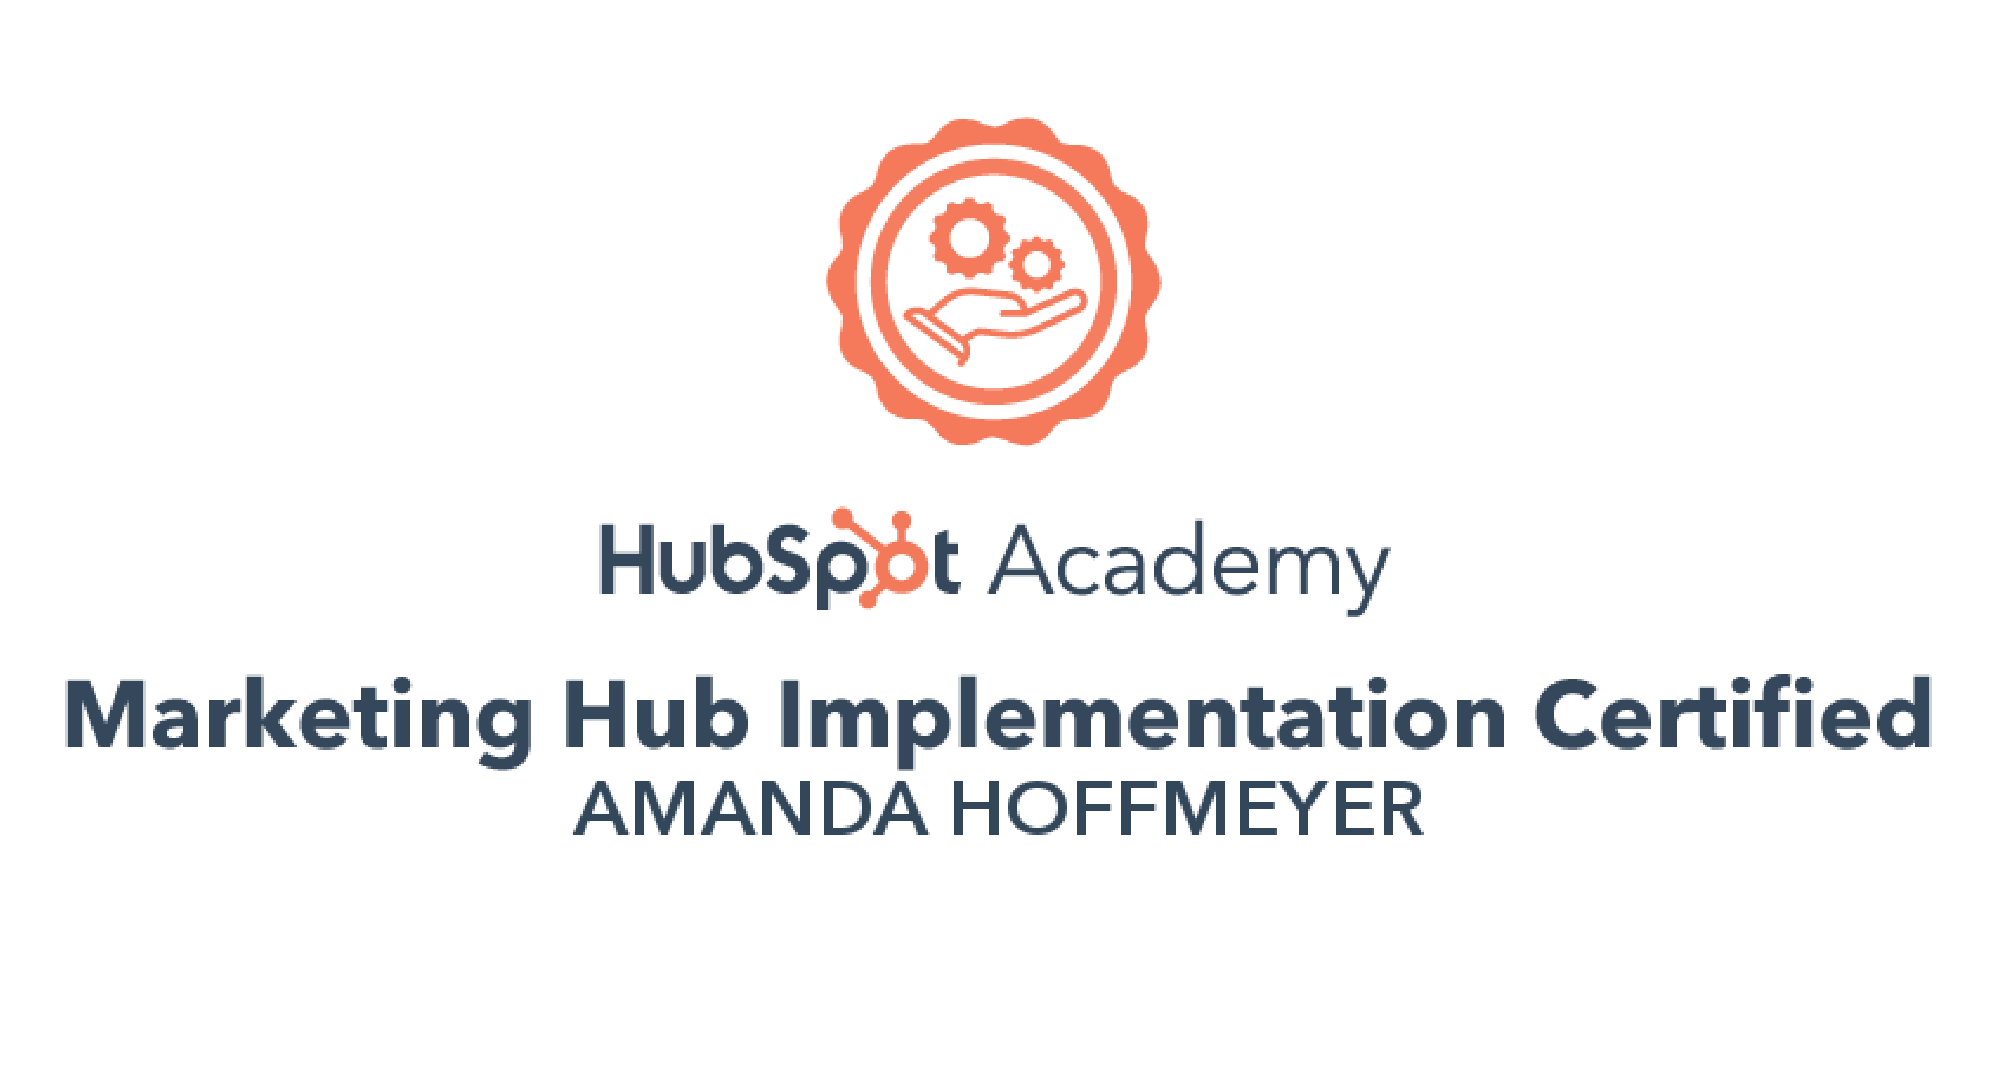 Sales Hub Implementation Certified Marketing - 3